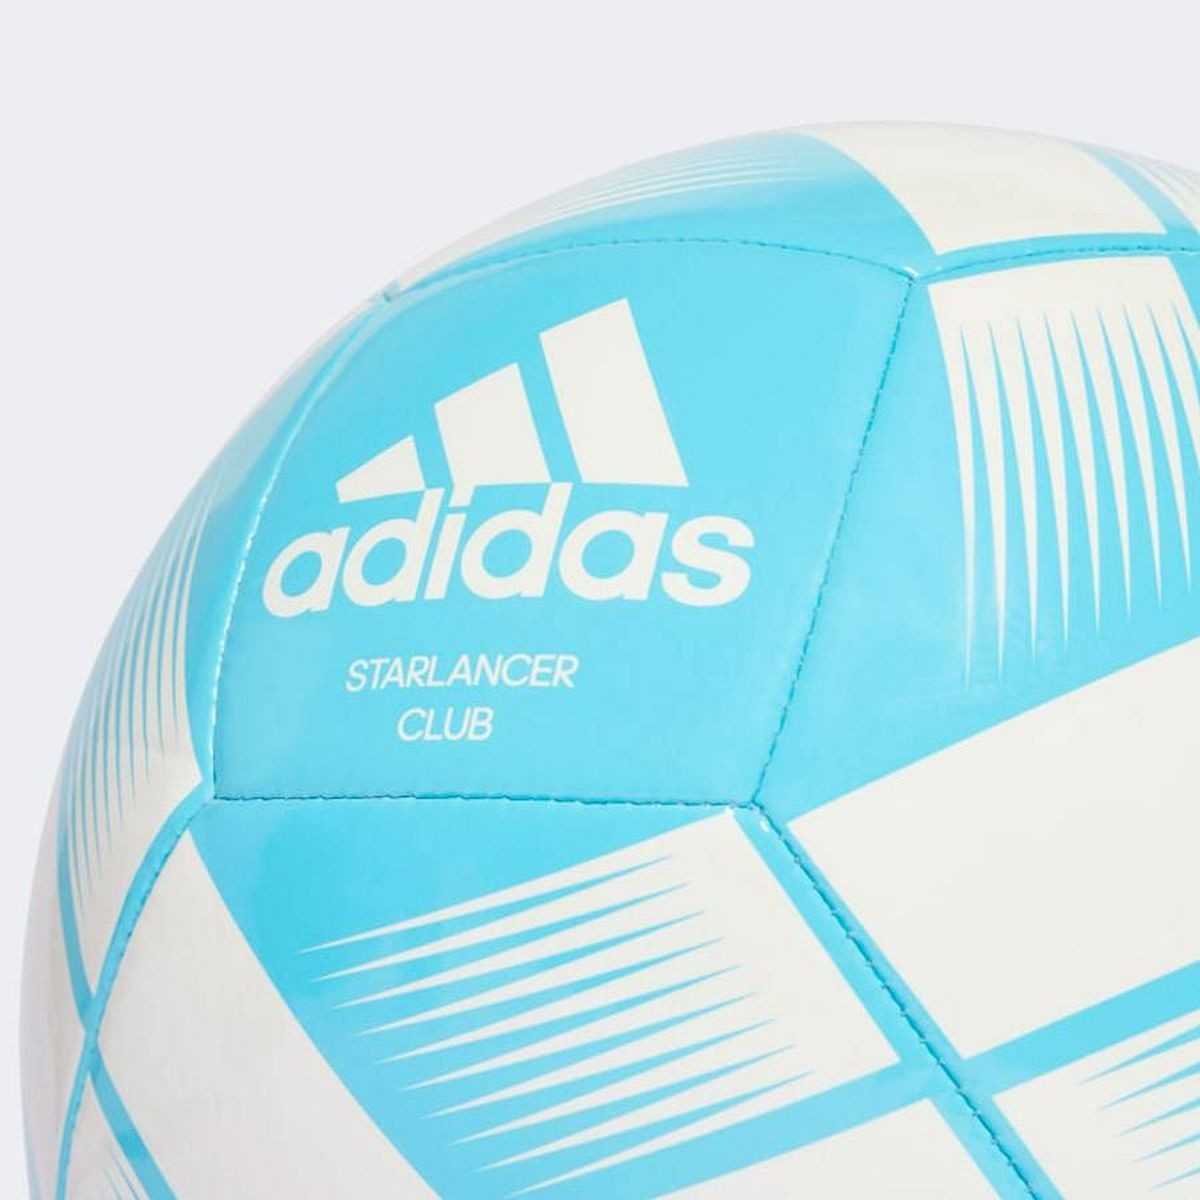 Adidas Starlancer Club futbolo kamuolys, 5 